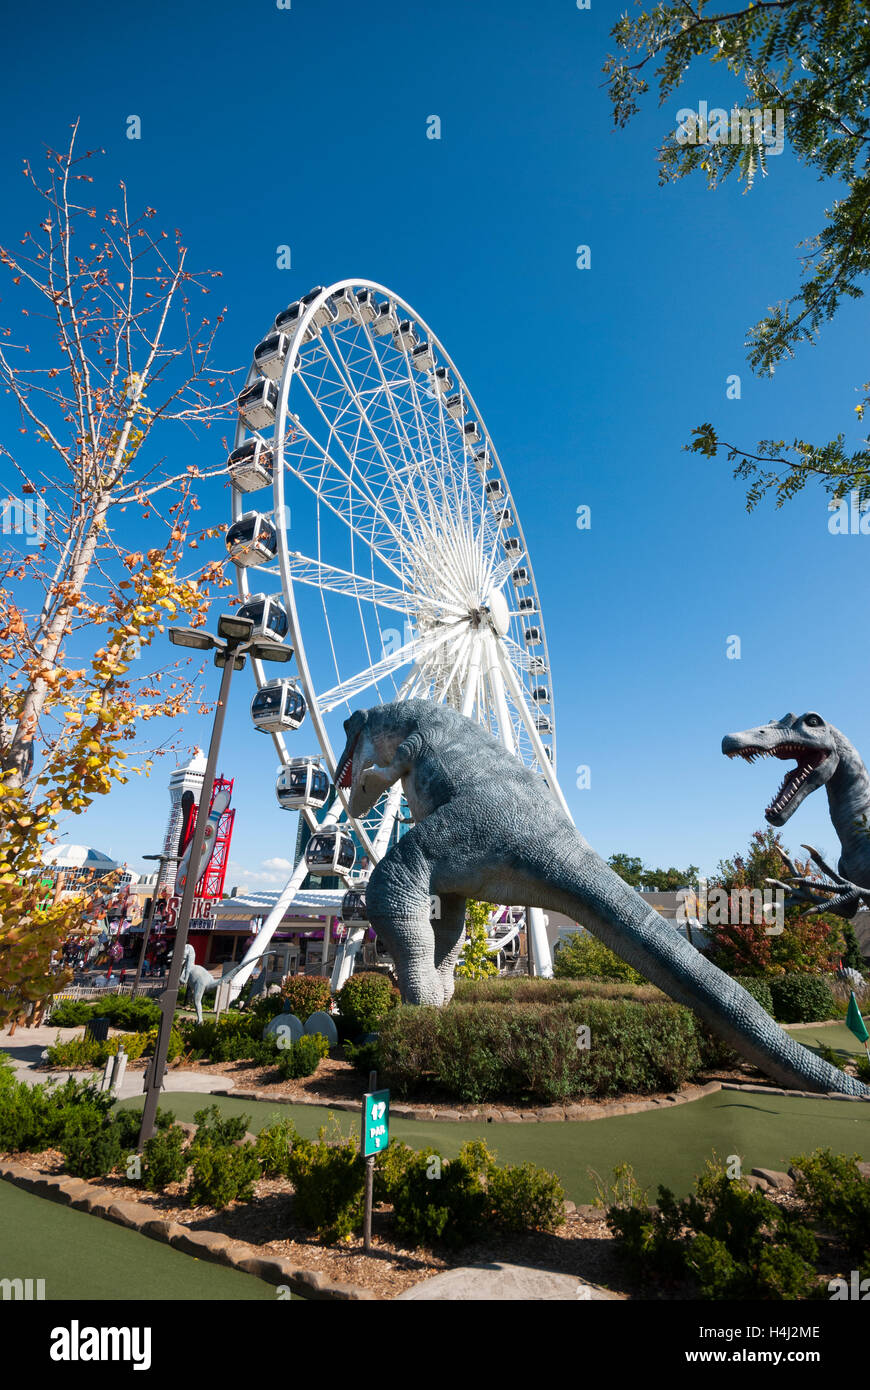 The Skywheel seen next to Dinosaur Adventure Golf a 70,000 sq foot dinosaur themed mini golf attraction in Niagara Falls Canada Stock Photo